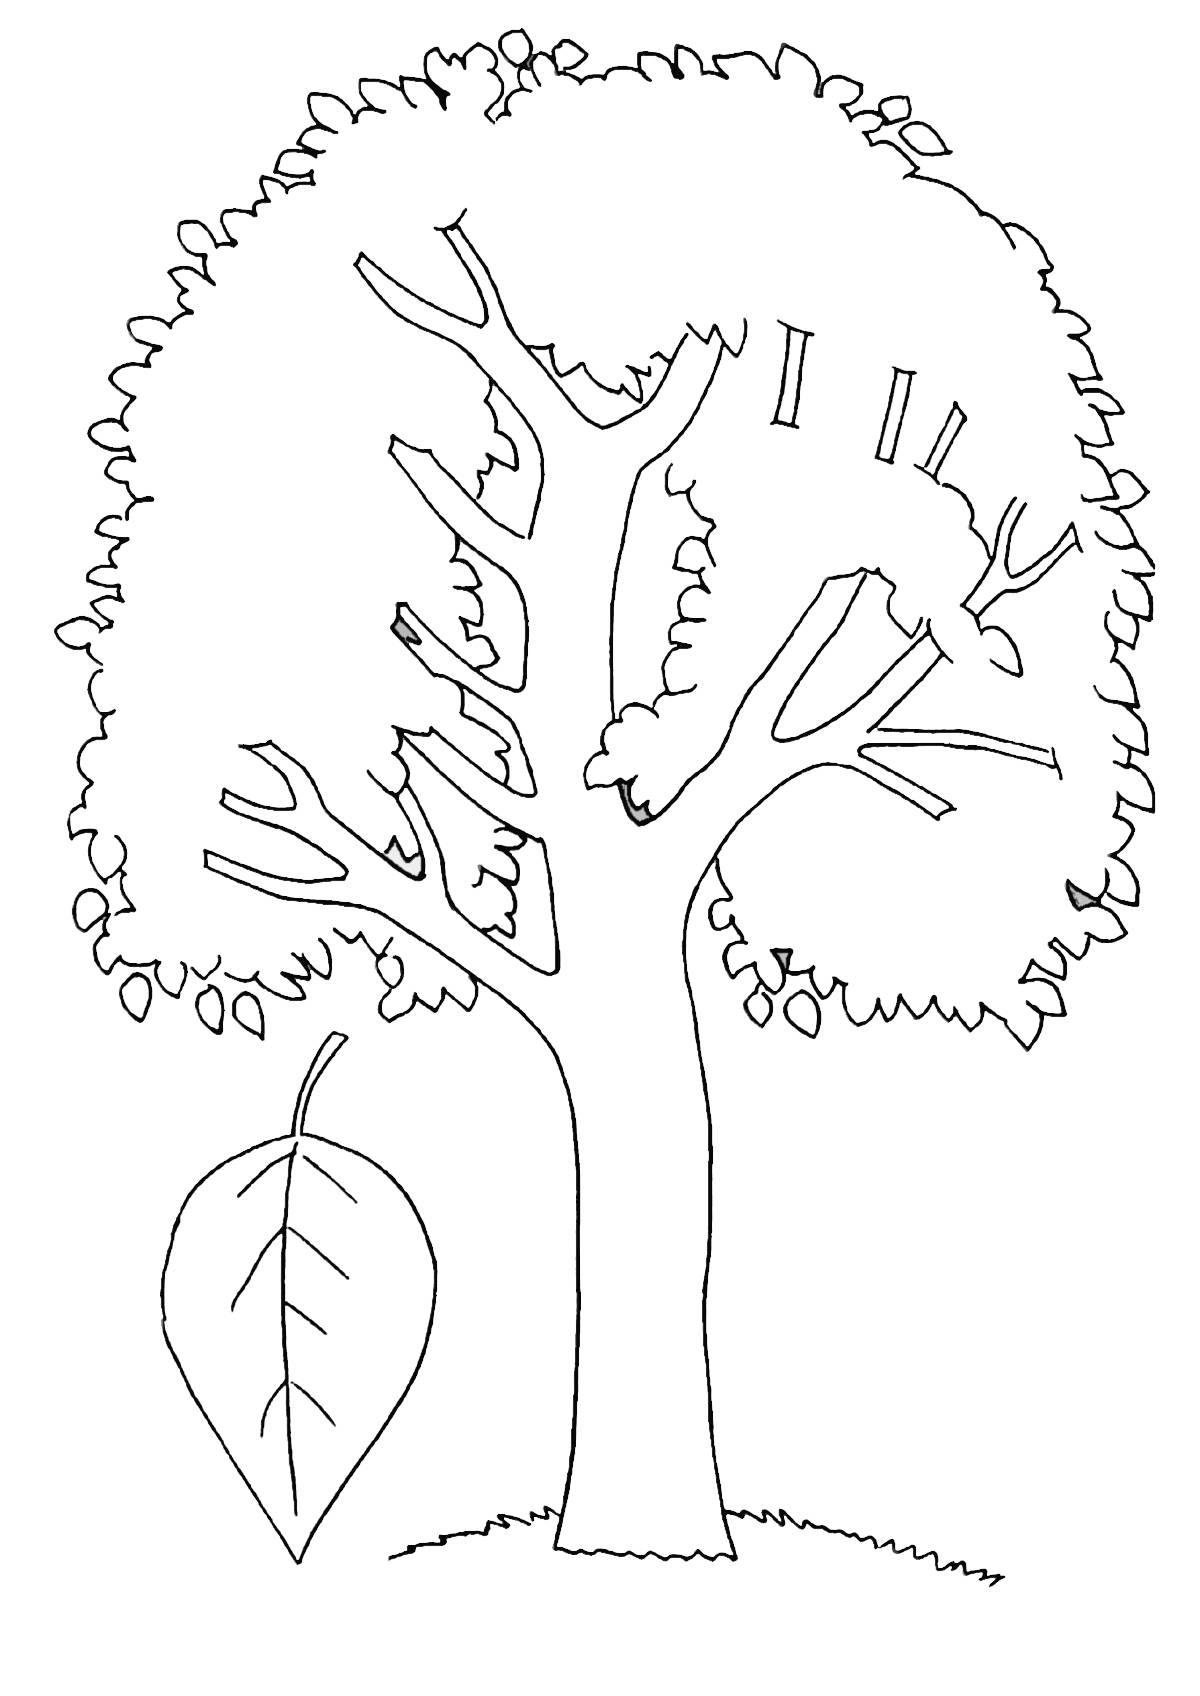 Poplar drawing